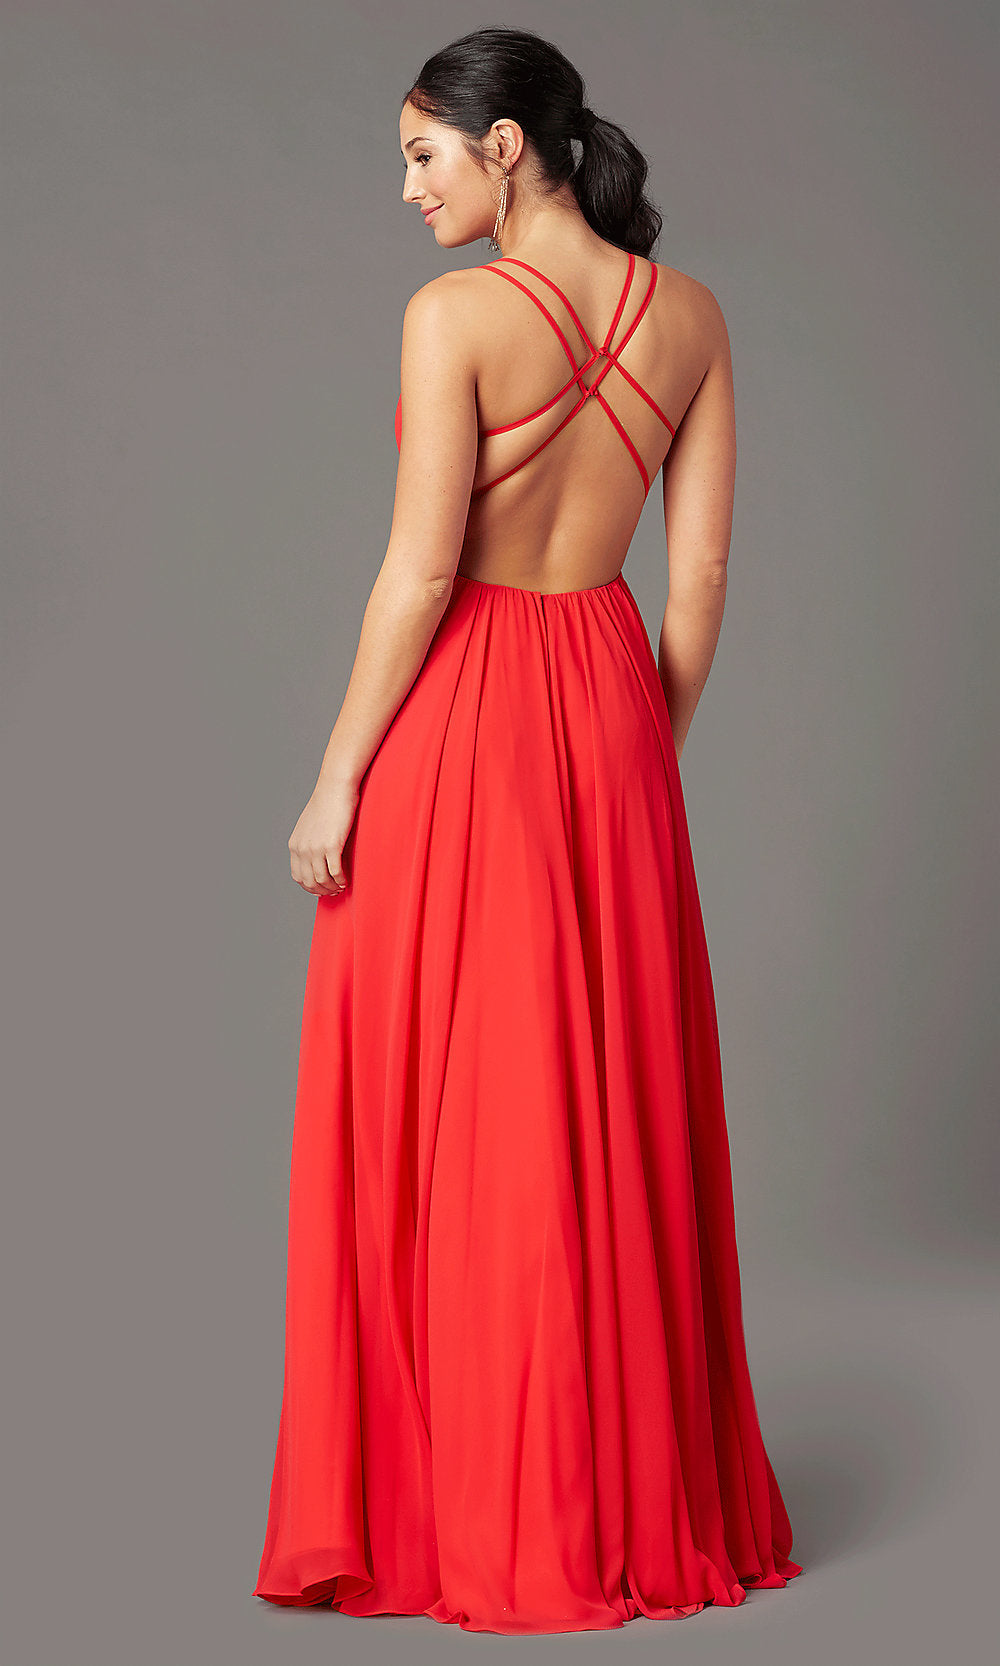 Formal V-Neck A-Line Long Prom Dress by PromGirl